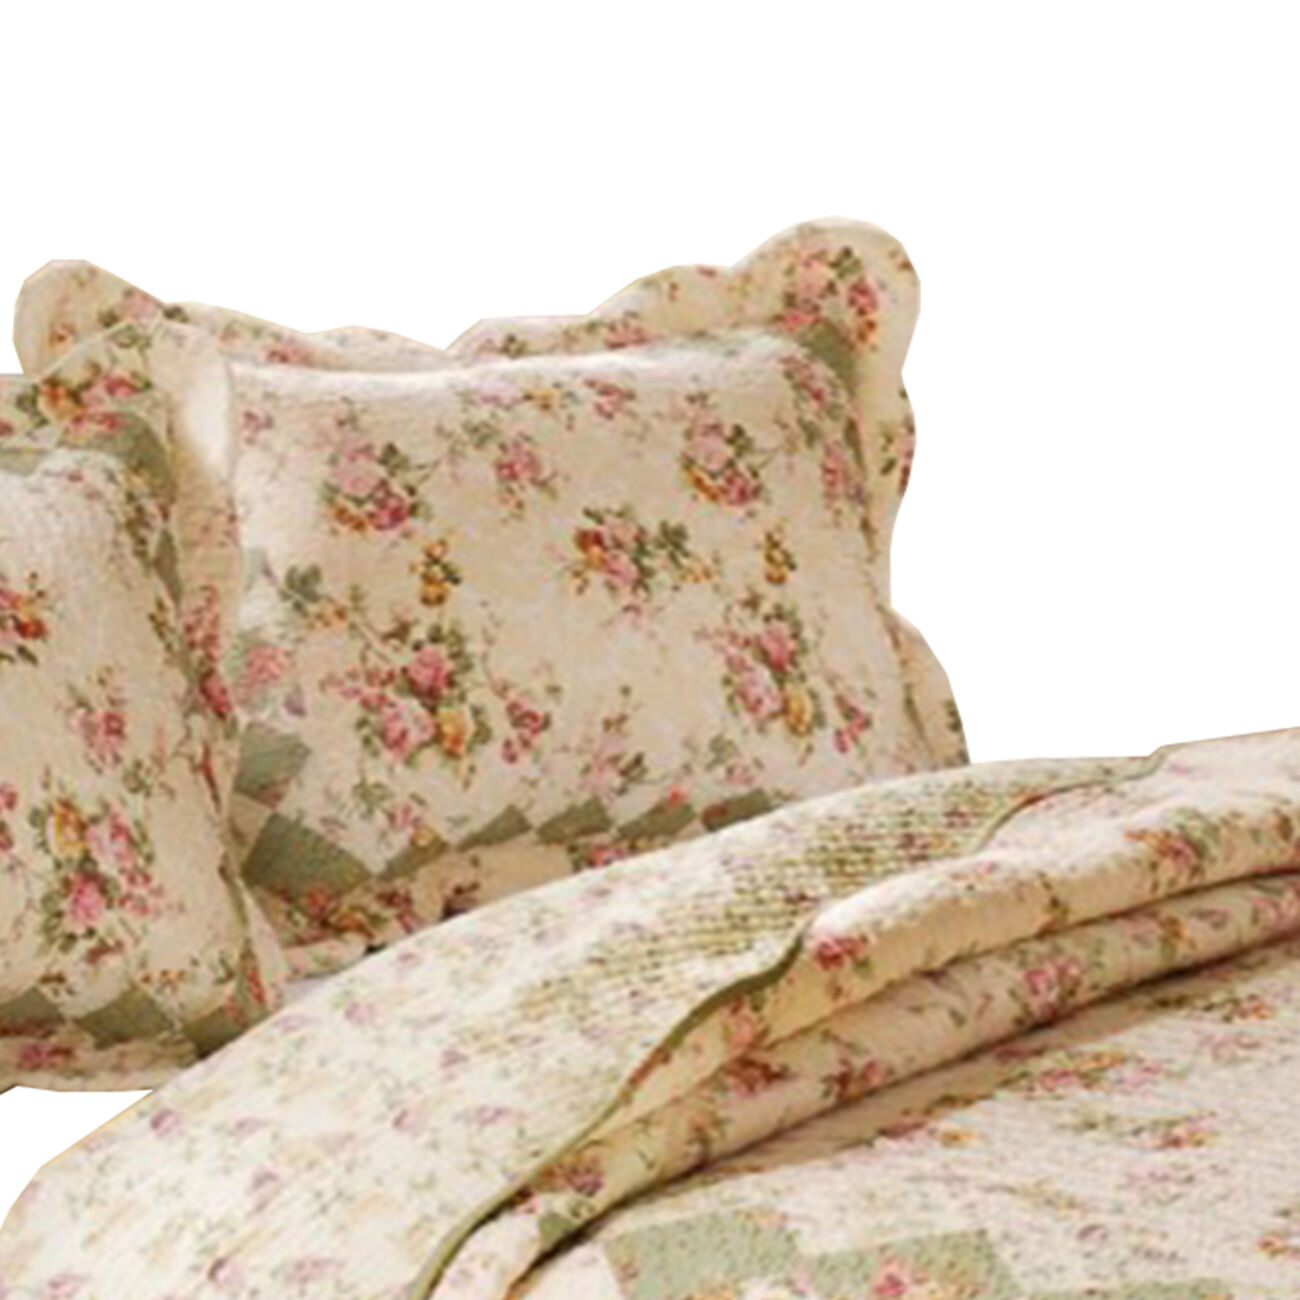 Denali 2 Piece Fabric Twin Size Quilt Set with Floral Prints, Multicolor